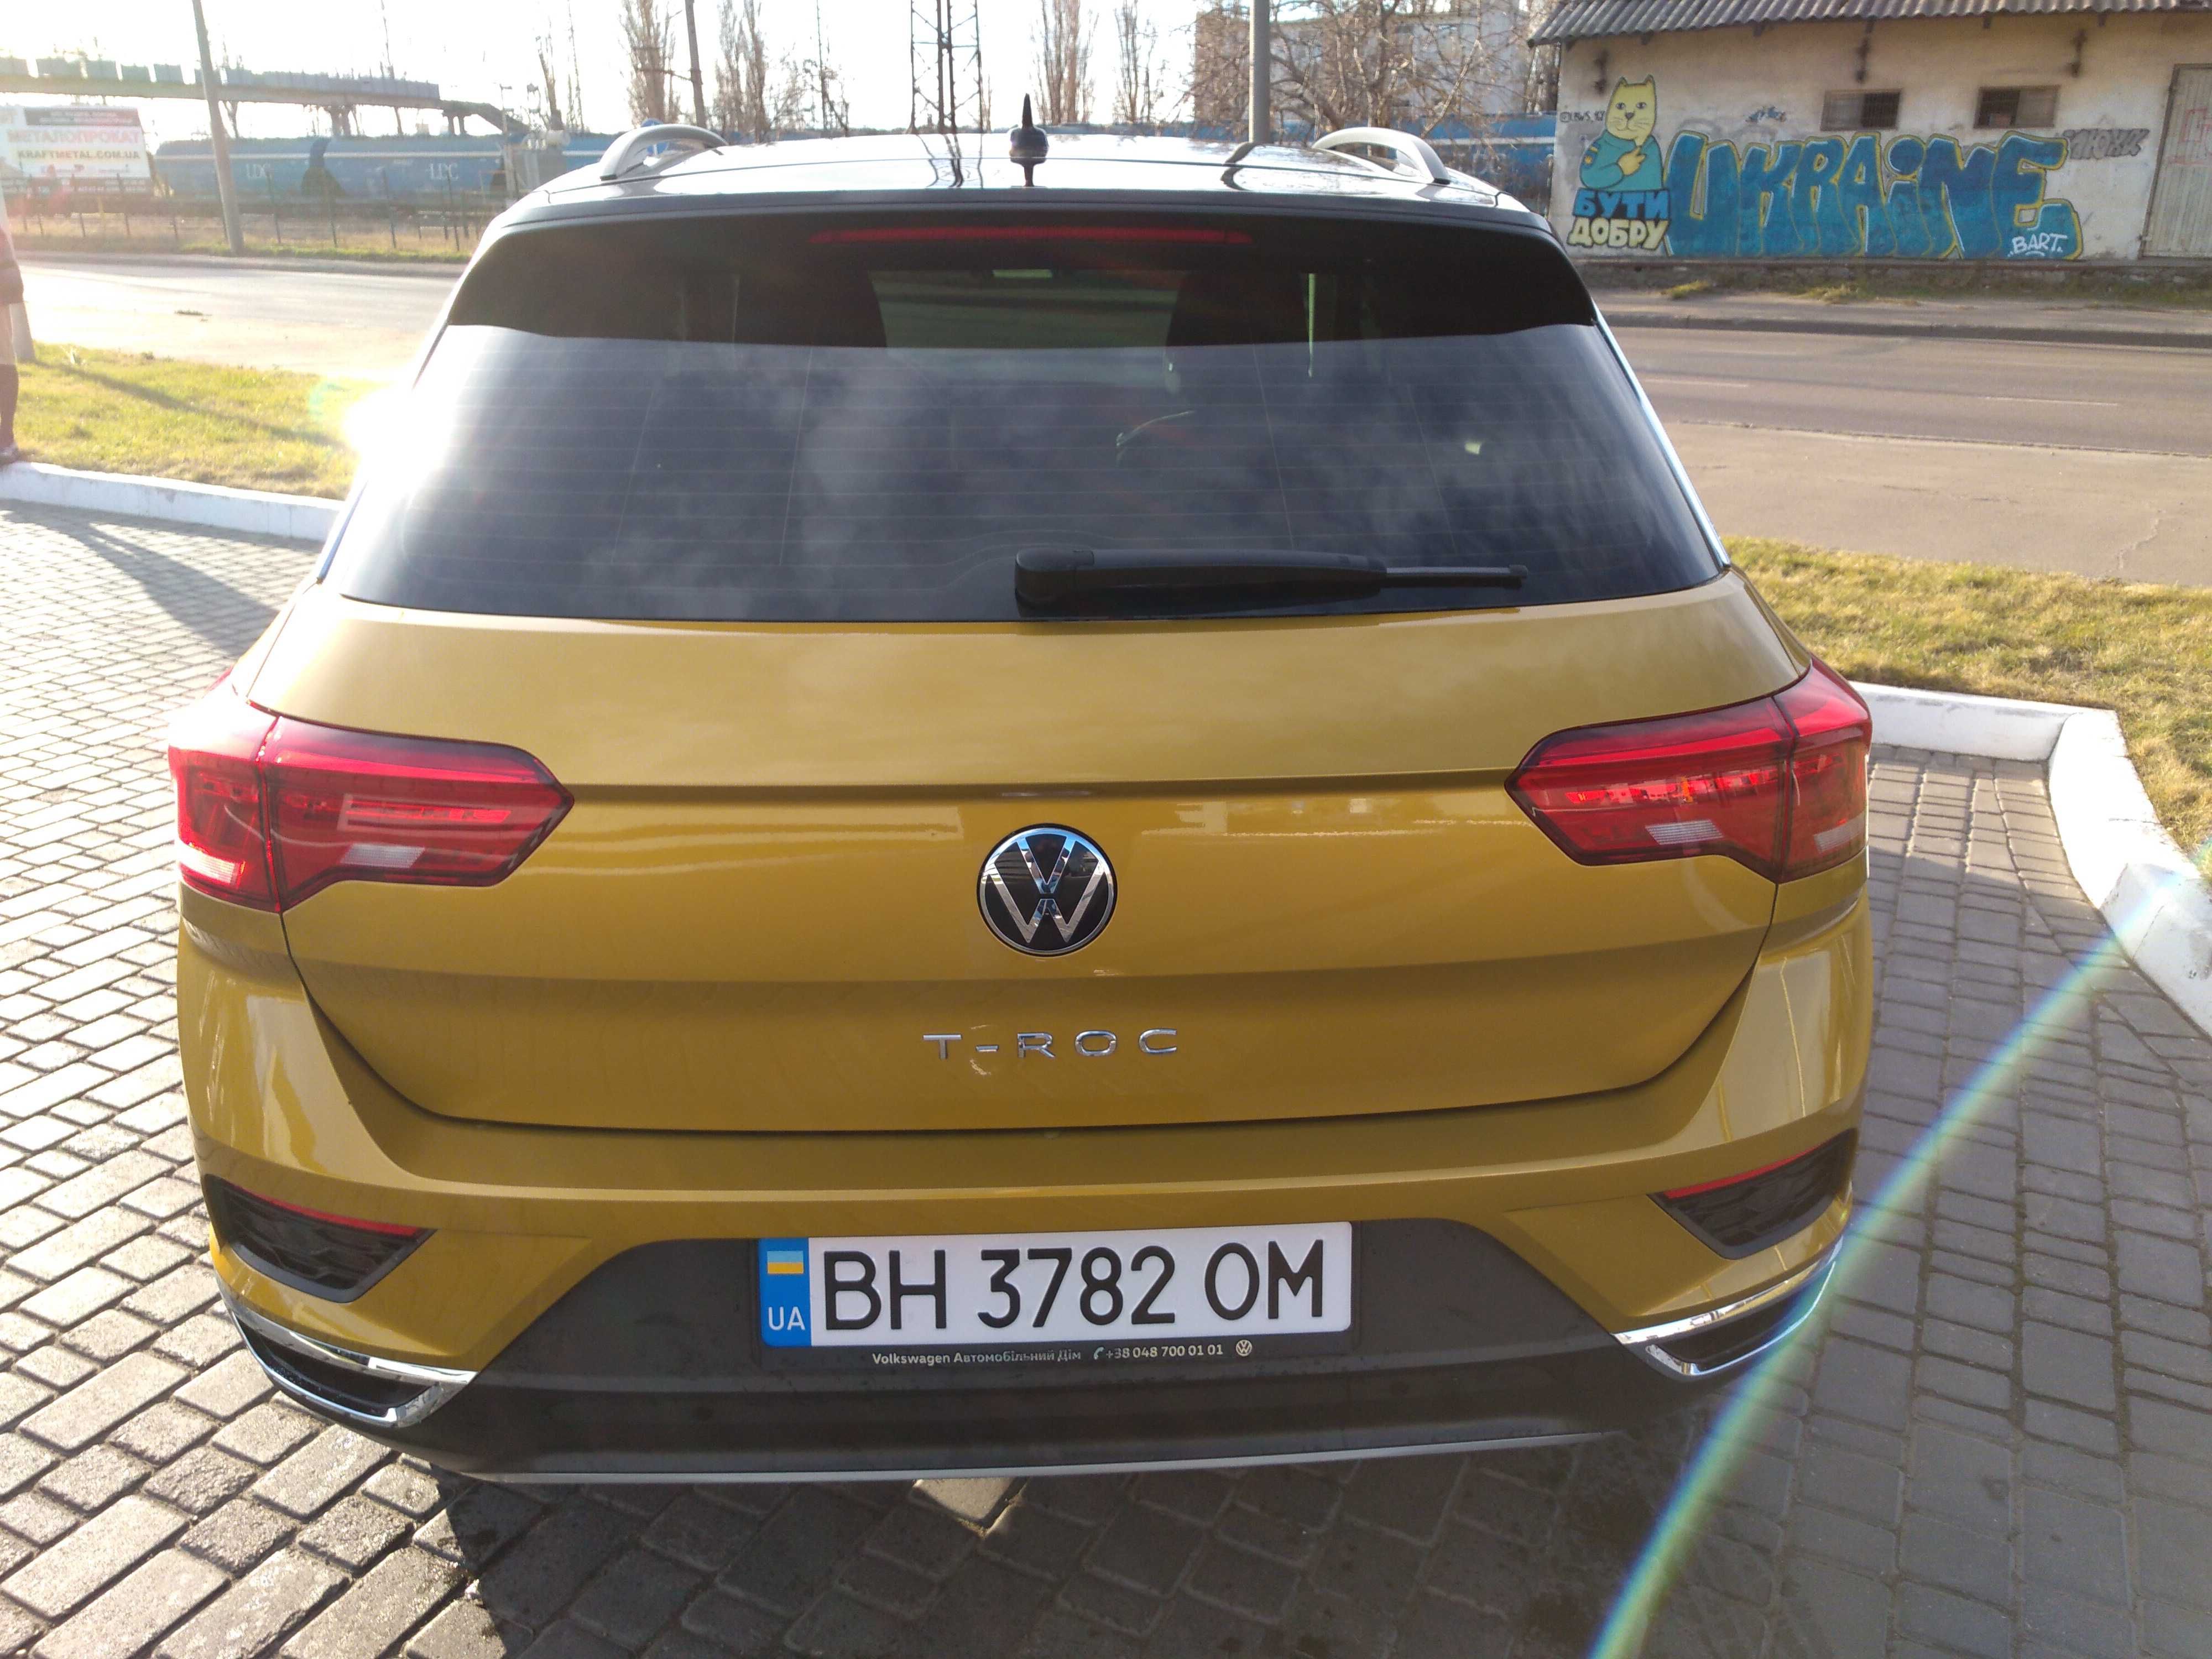 Продам VW T-Roc Style Limited 1,5л 150л.с., февраль 2021года  26000USD